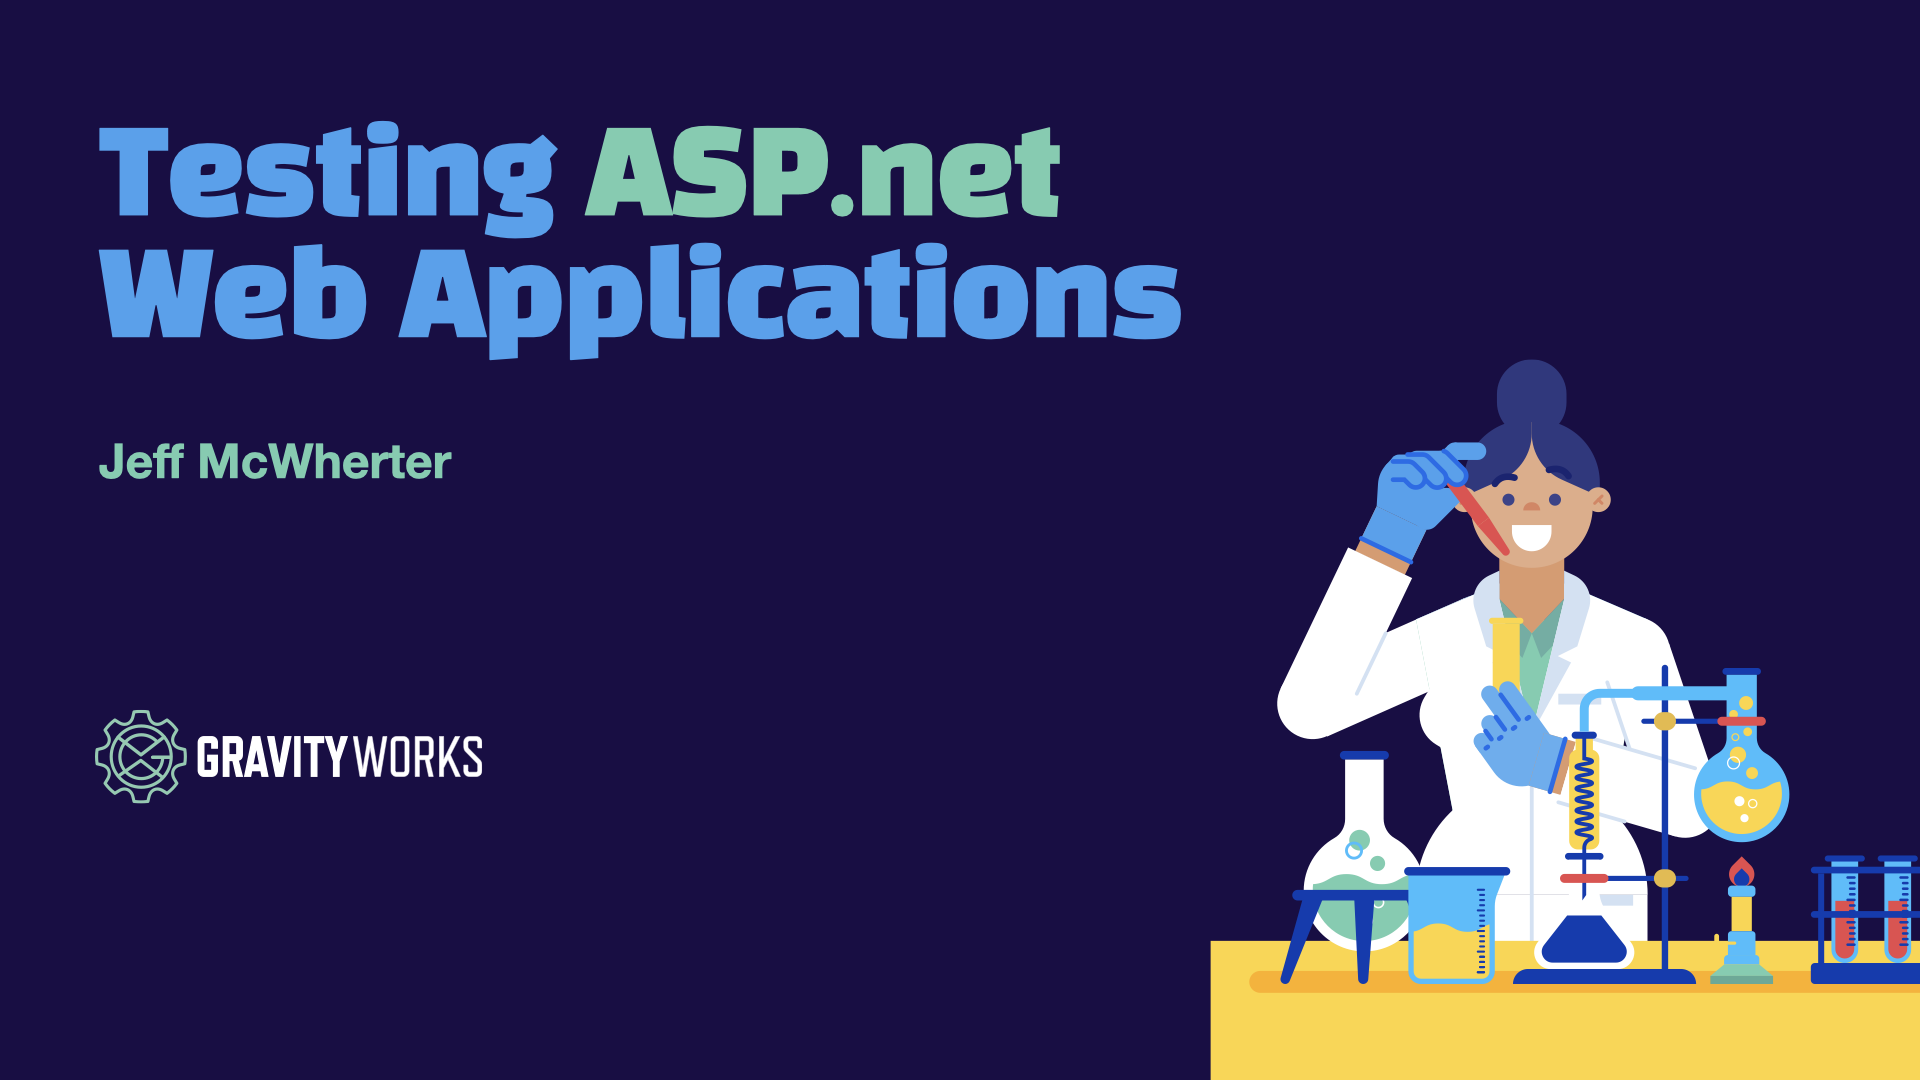 Testing ASP.net Web Applications